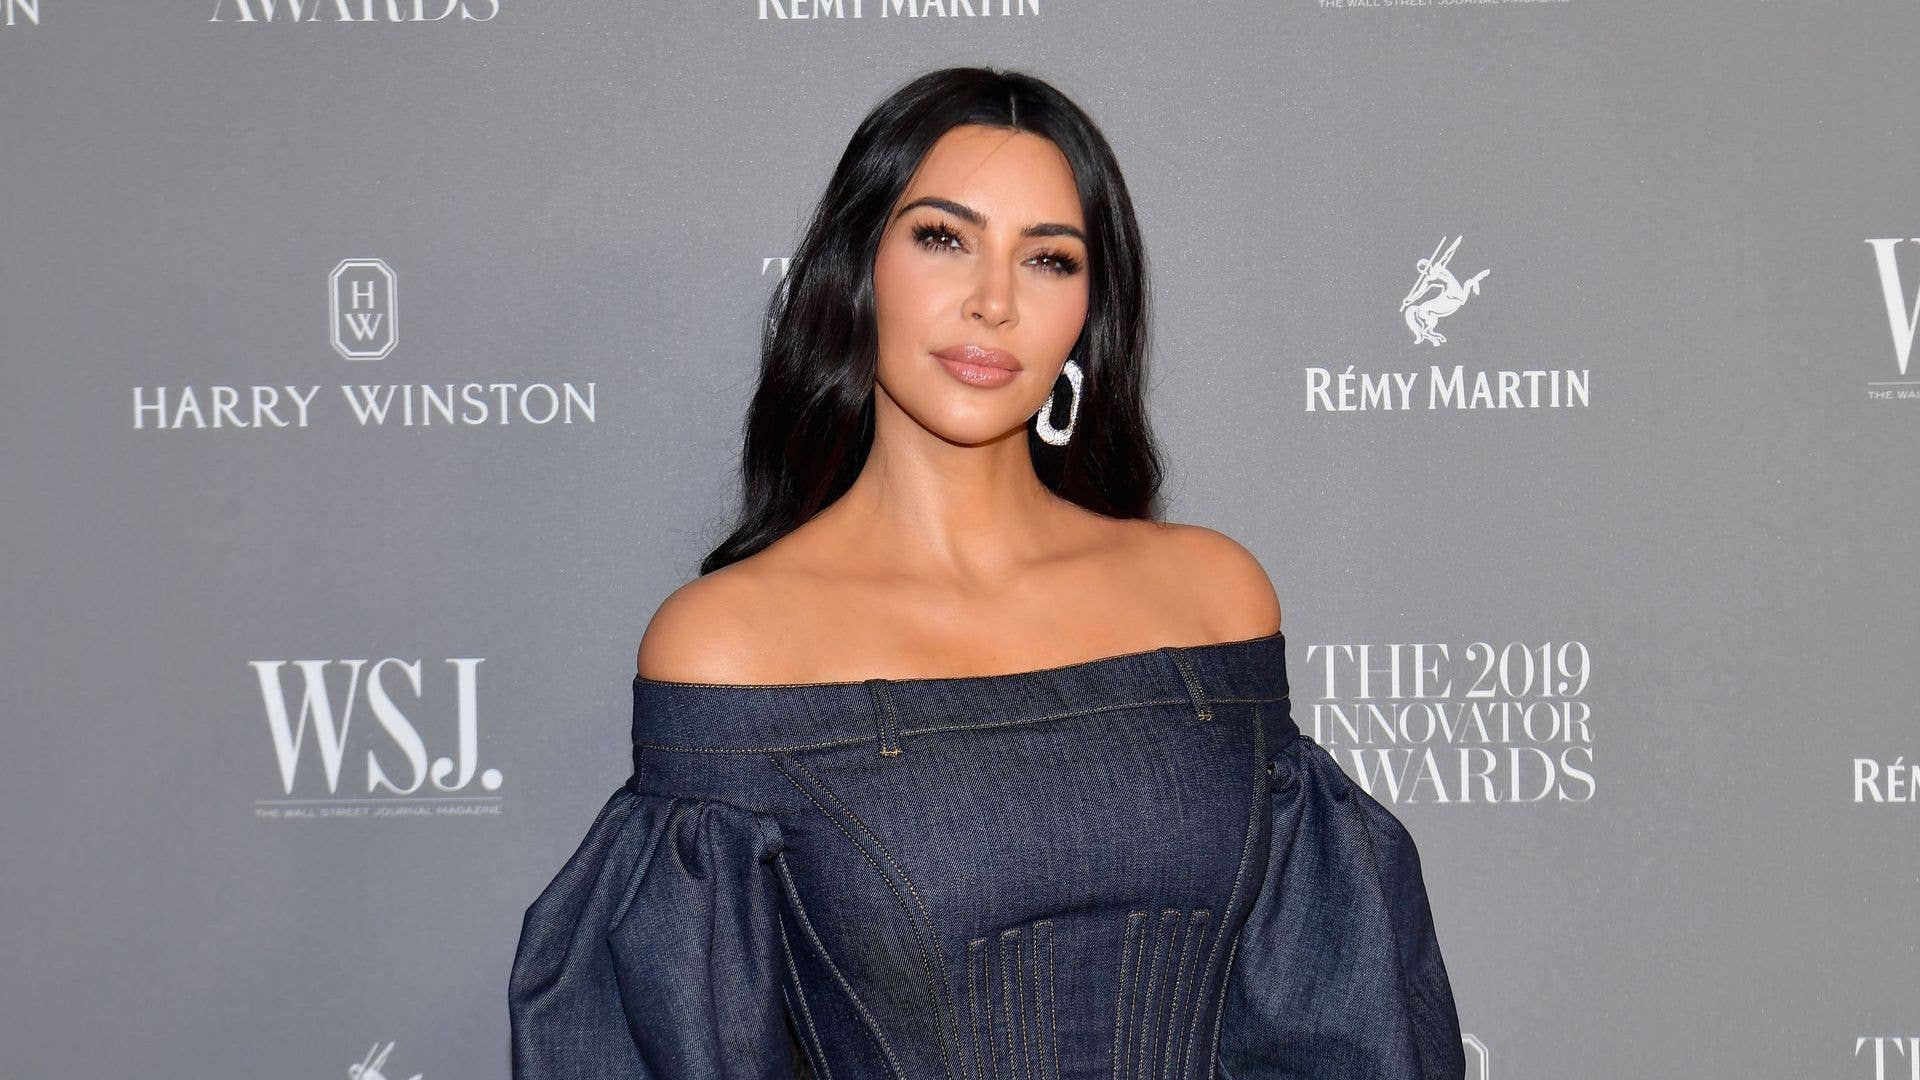 Kim Kardashian Is Now a Billionaire, According to 'Forbes